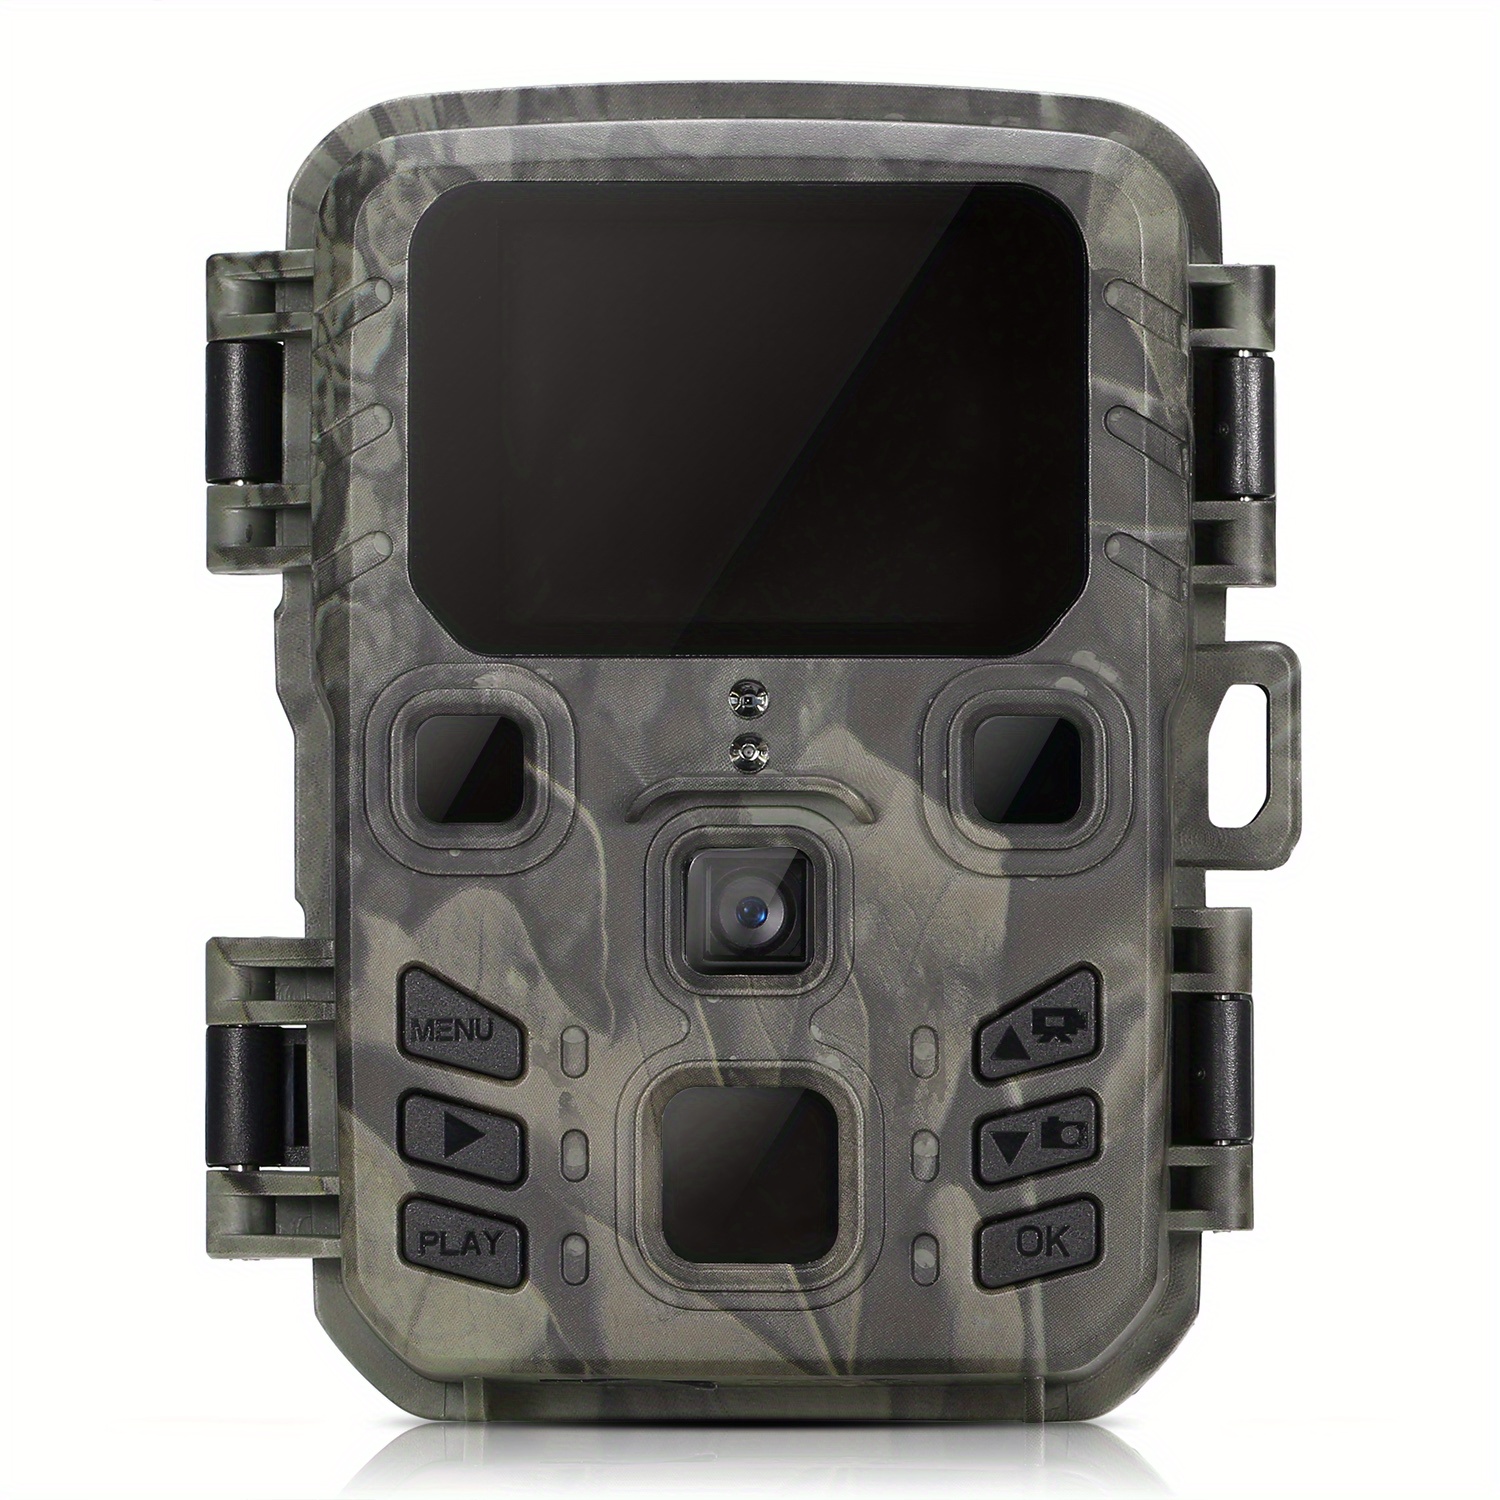 Cámara de rastreo de 24MP 1080P, cámara de juego con visión nocturna,  tiempo de activación de 0.2 s, cámaras de caza impermeables con LCD de 2.0